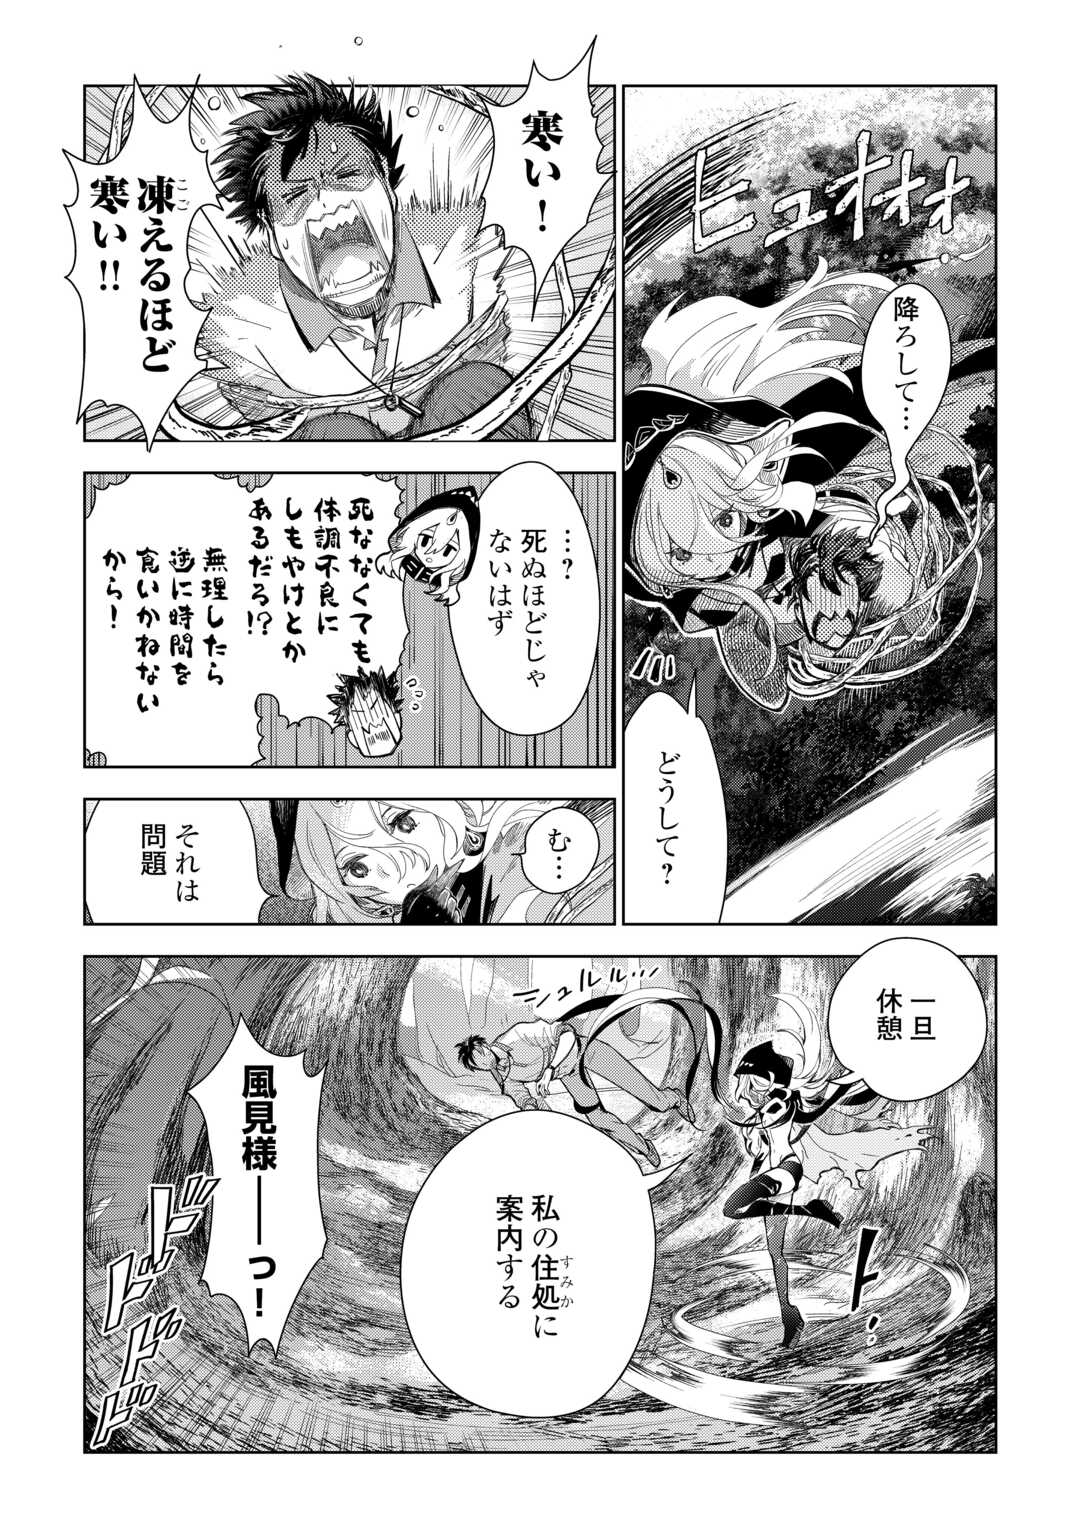 Jui-san no Oshigoto in Isekai - Chapter 73 - Page 2